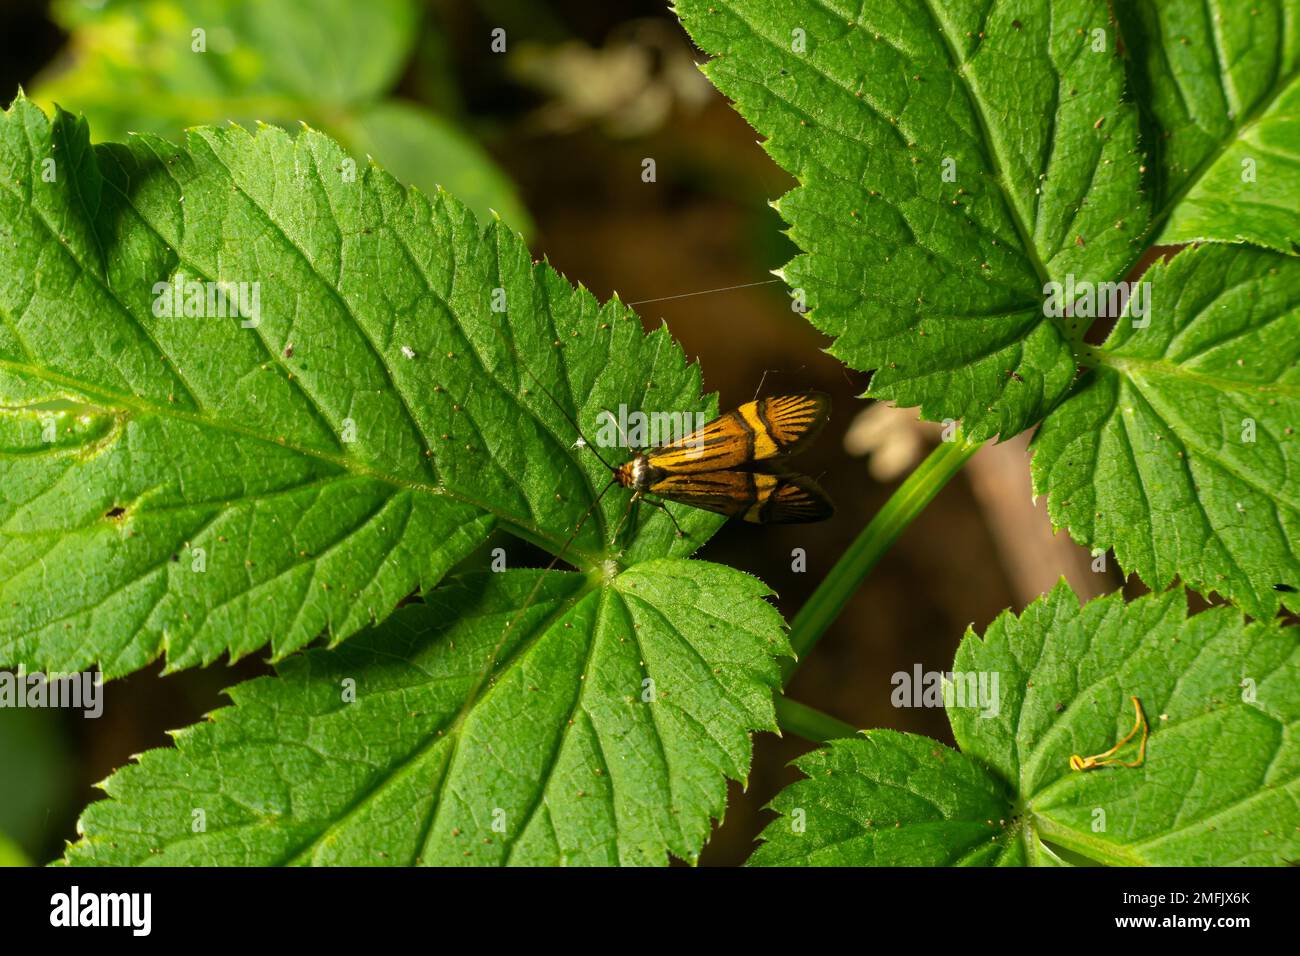 Close-up image of a long-legged butterfly, Nemophora degeerella. Green leaf. Stock Photo